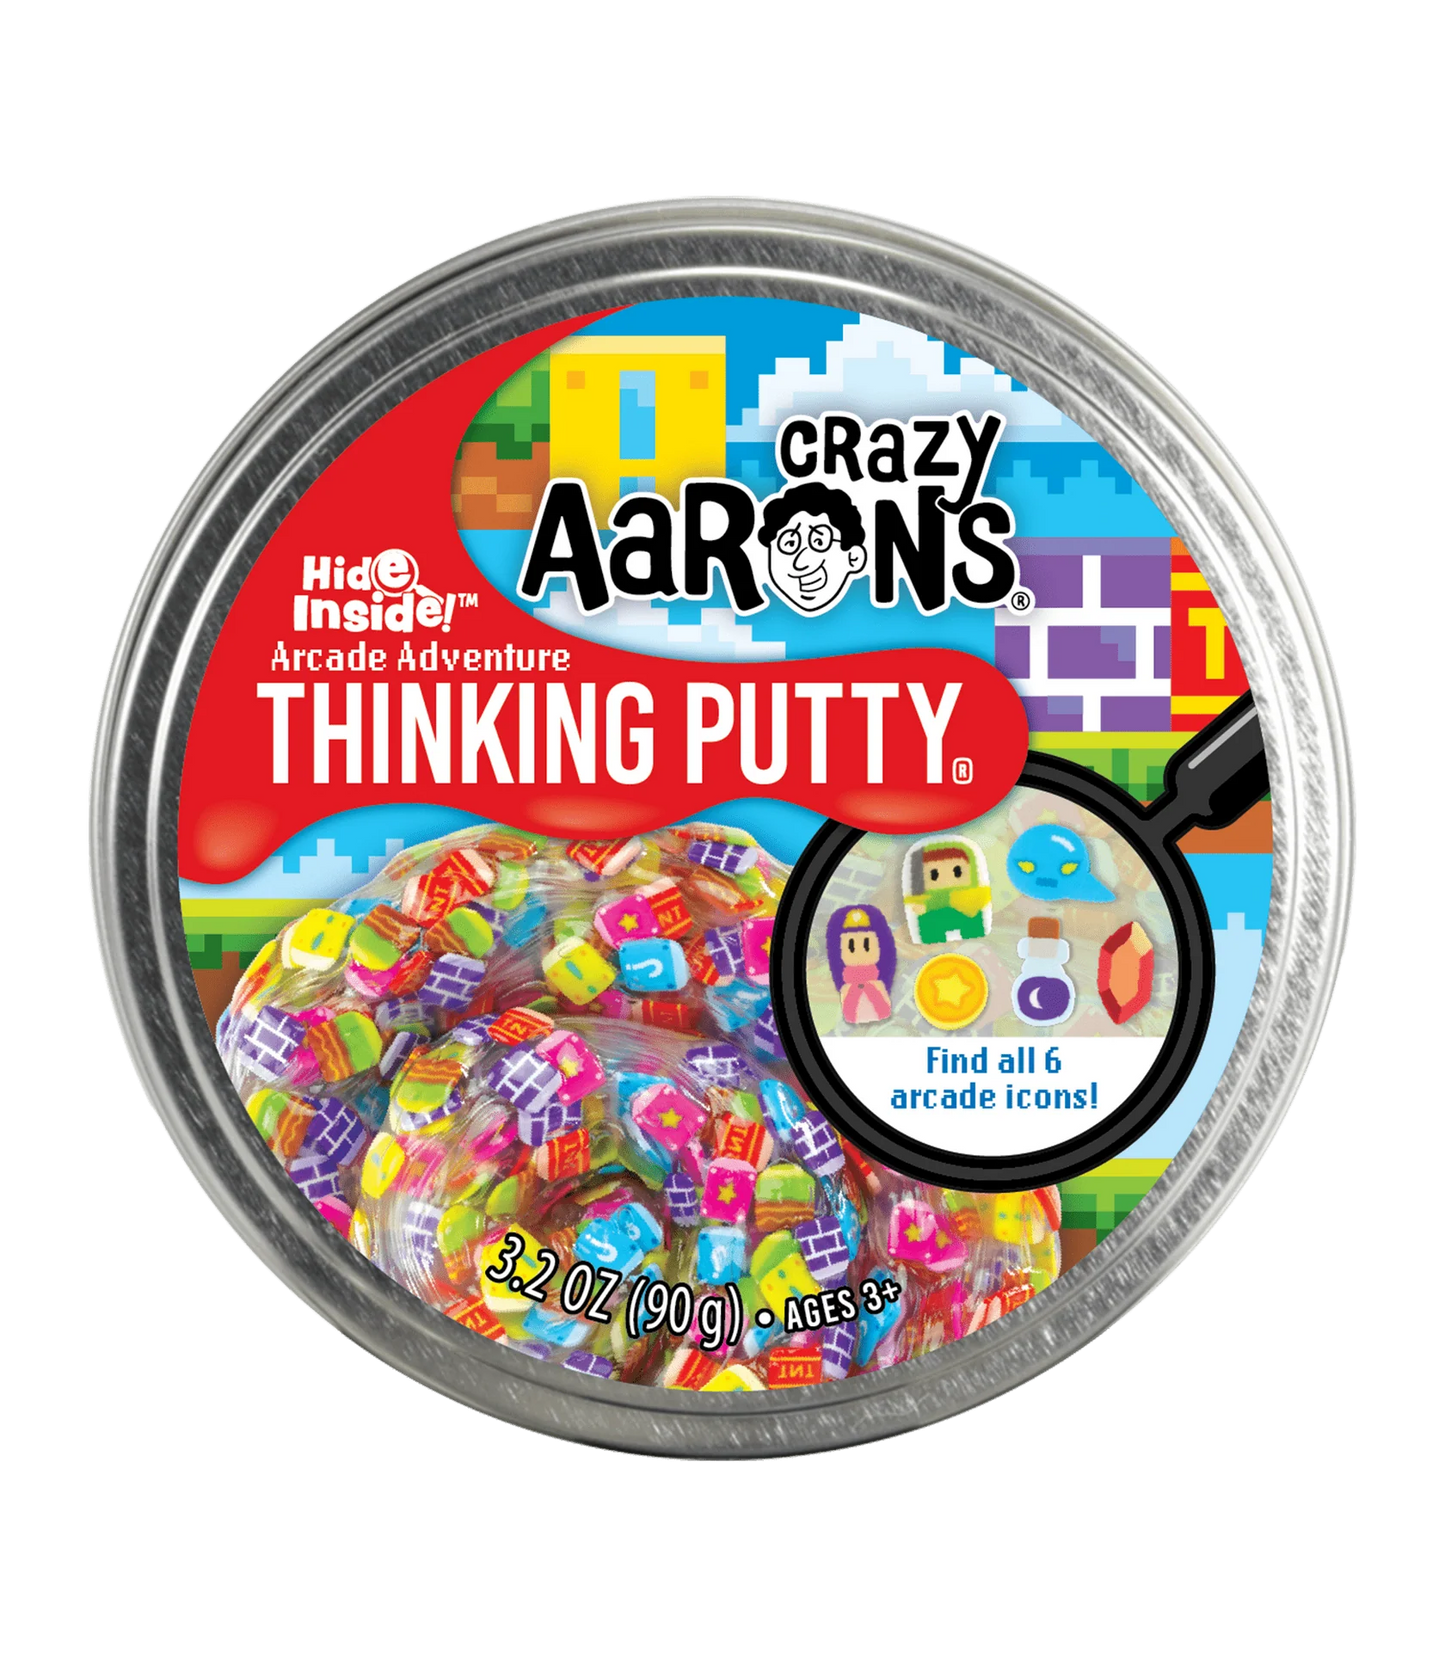 Crazy Aaron's - Thinking Putty - Arcade Adventure